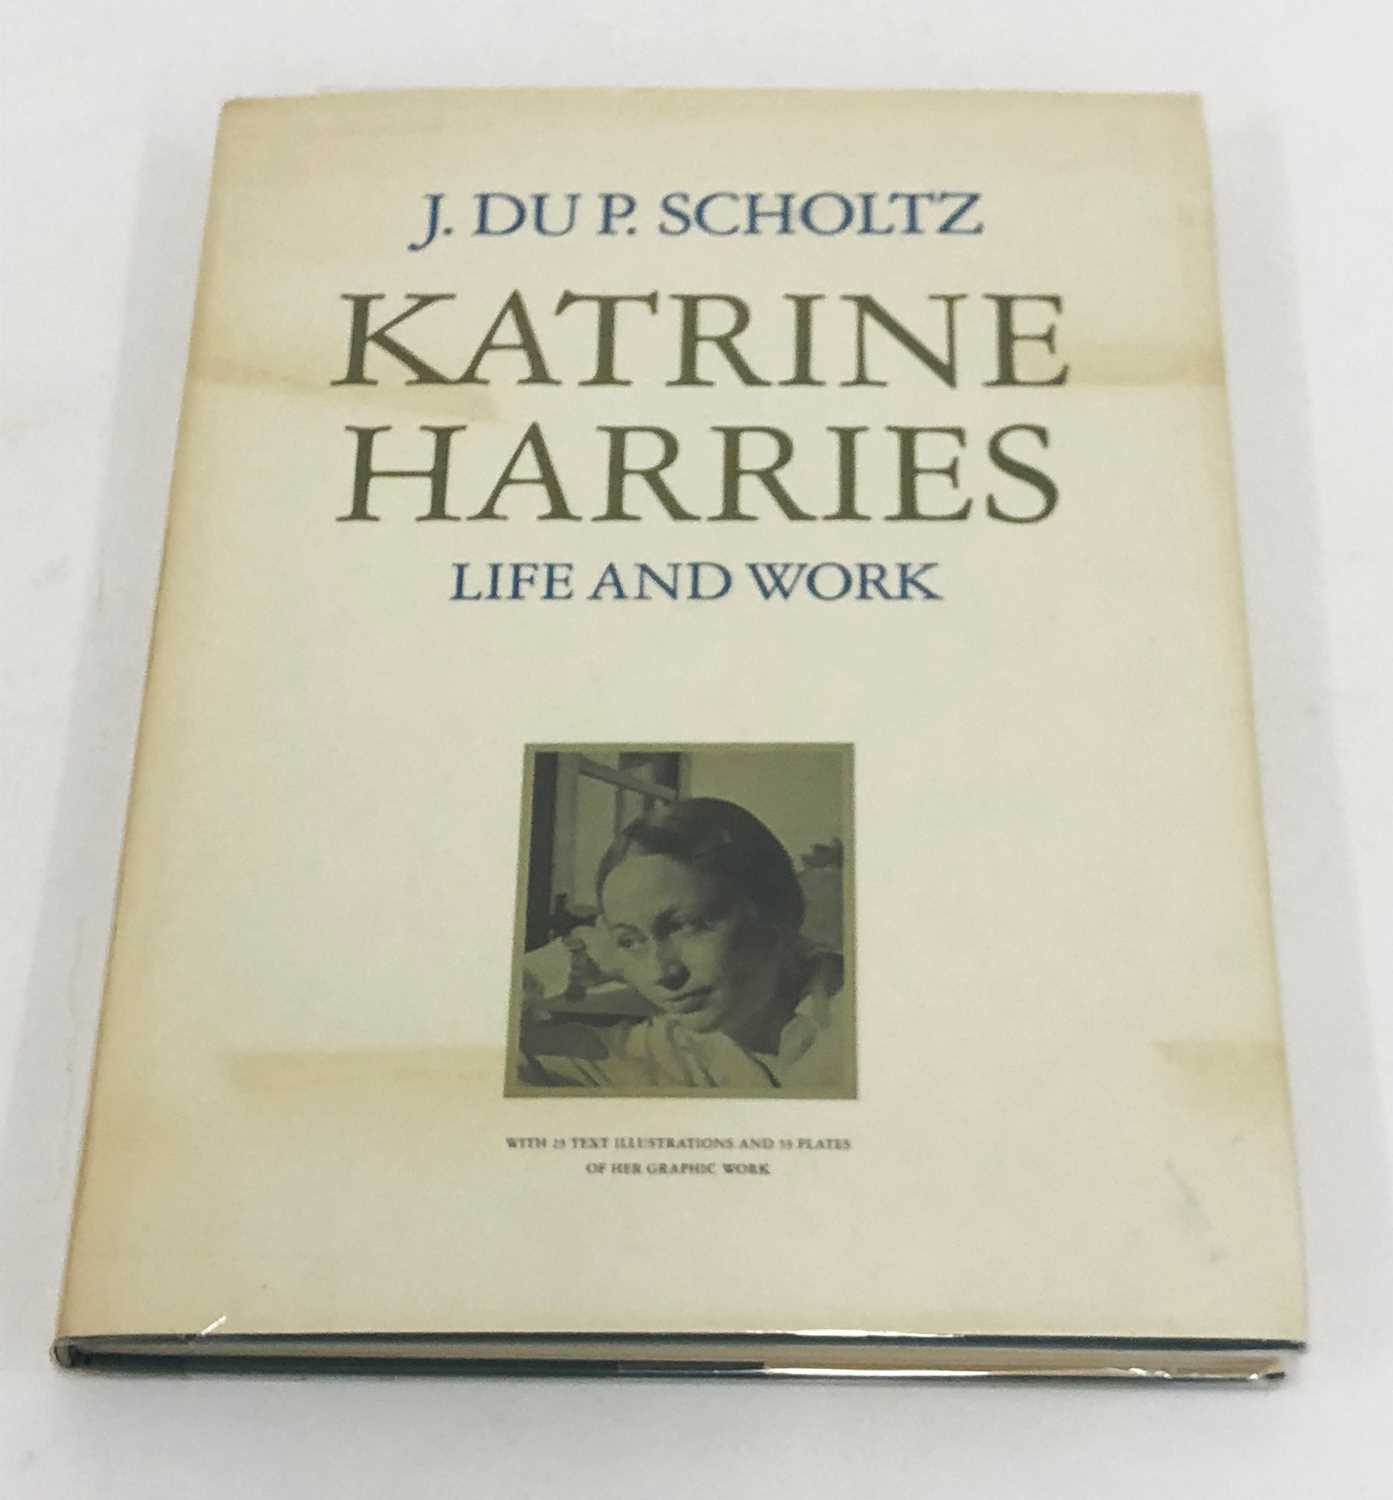 Lot 47 - Scholtz, J. Du P. Katrine Harries: Life and Work